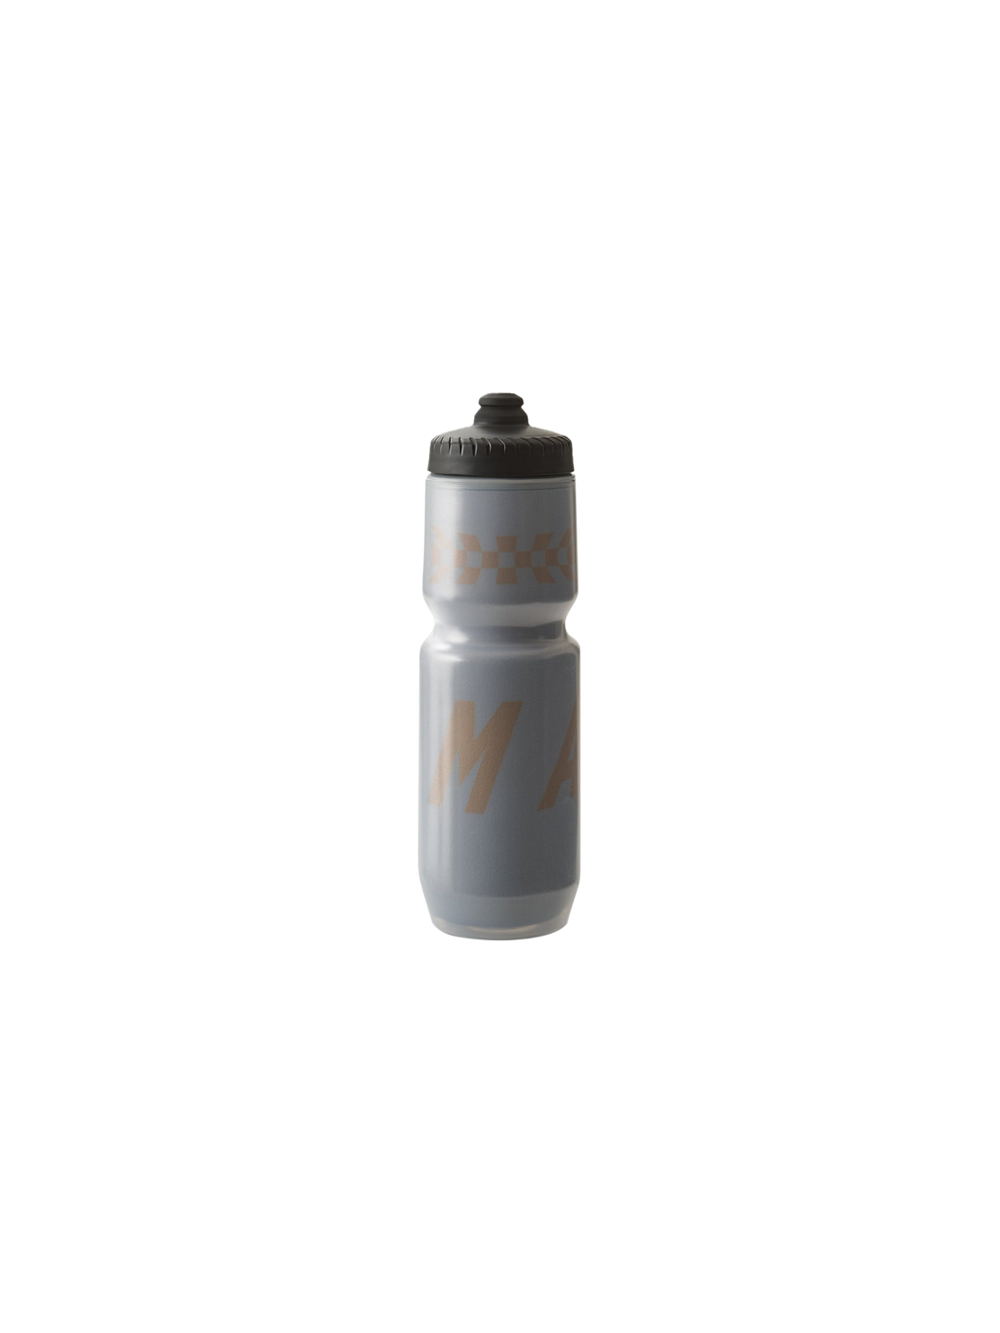 Product Image for Chromatek Insulated Bottle